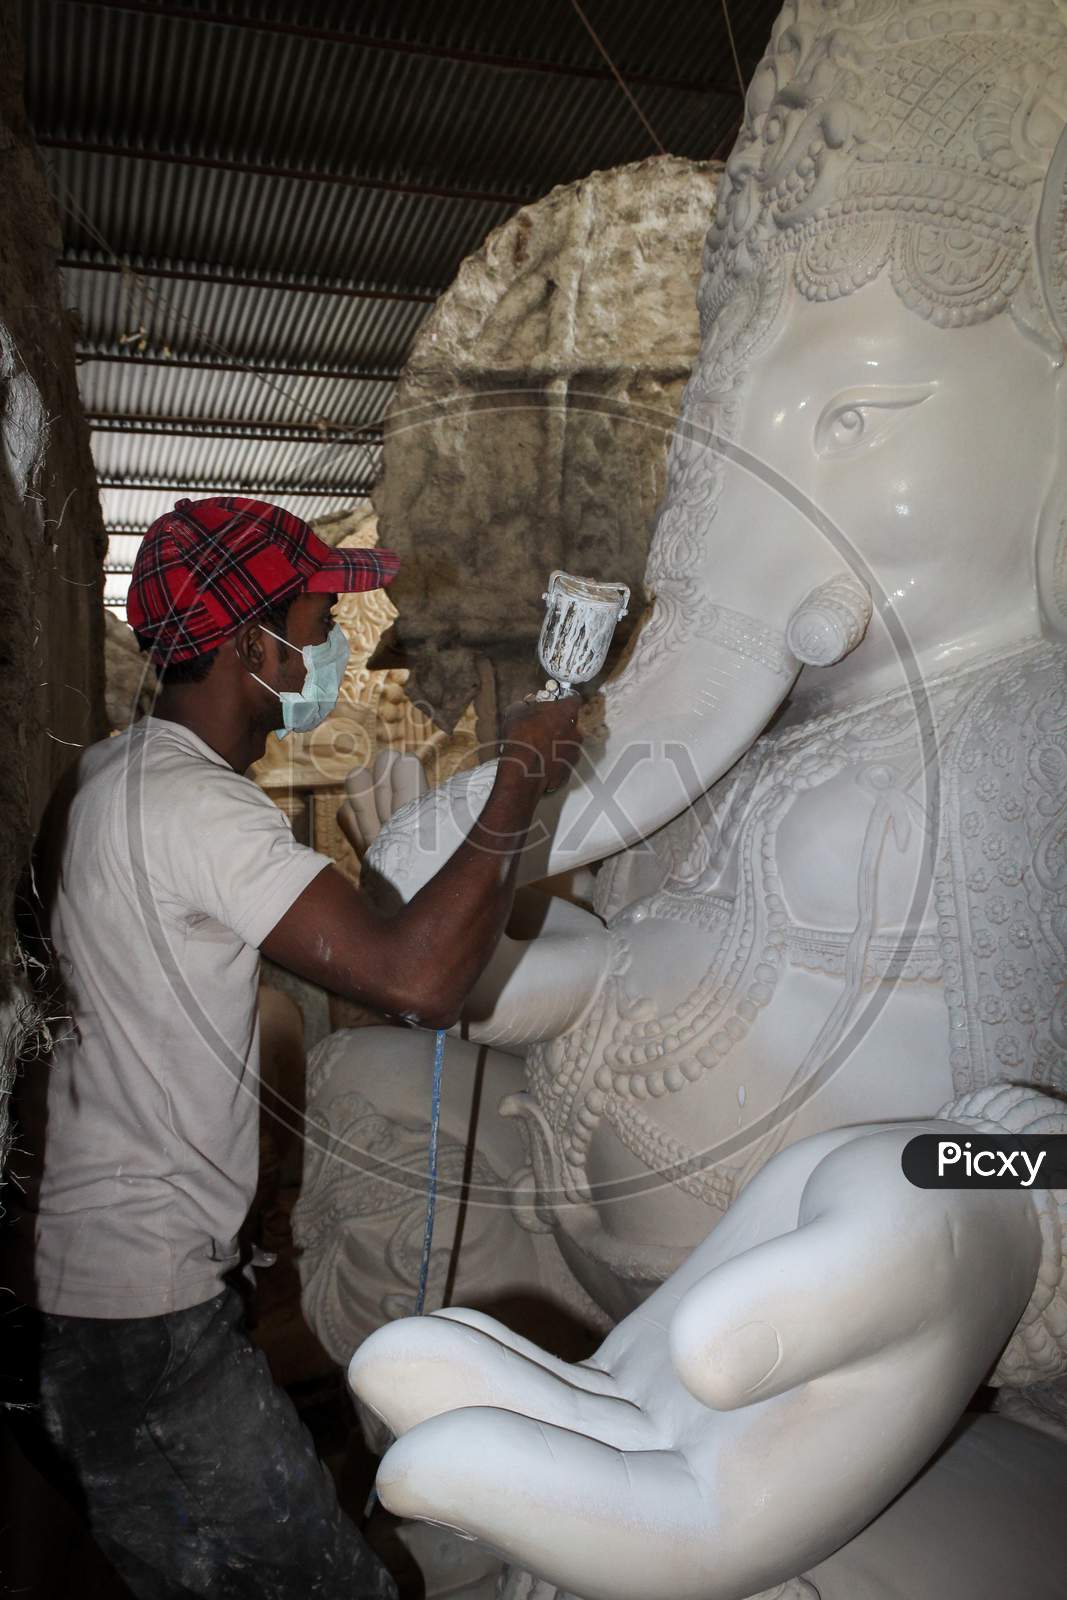 craftsmen busy in preparing ganesh idols for ganesh chaturthi